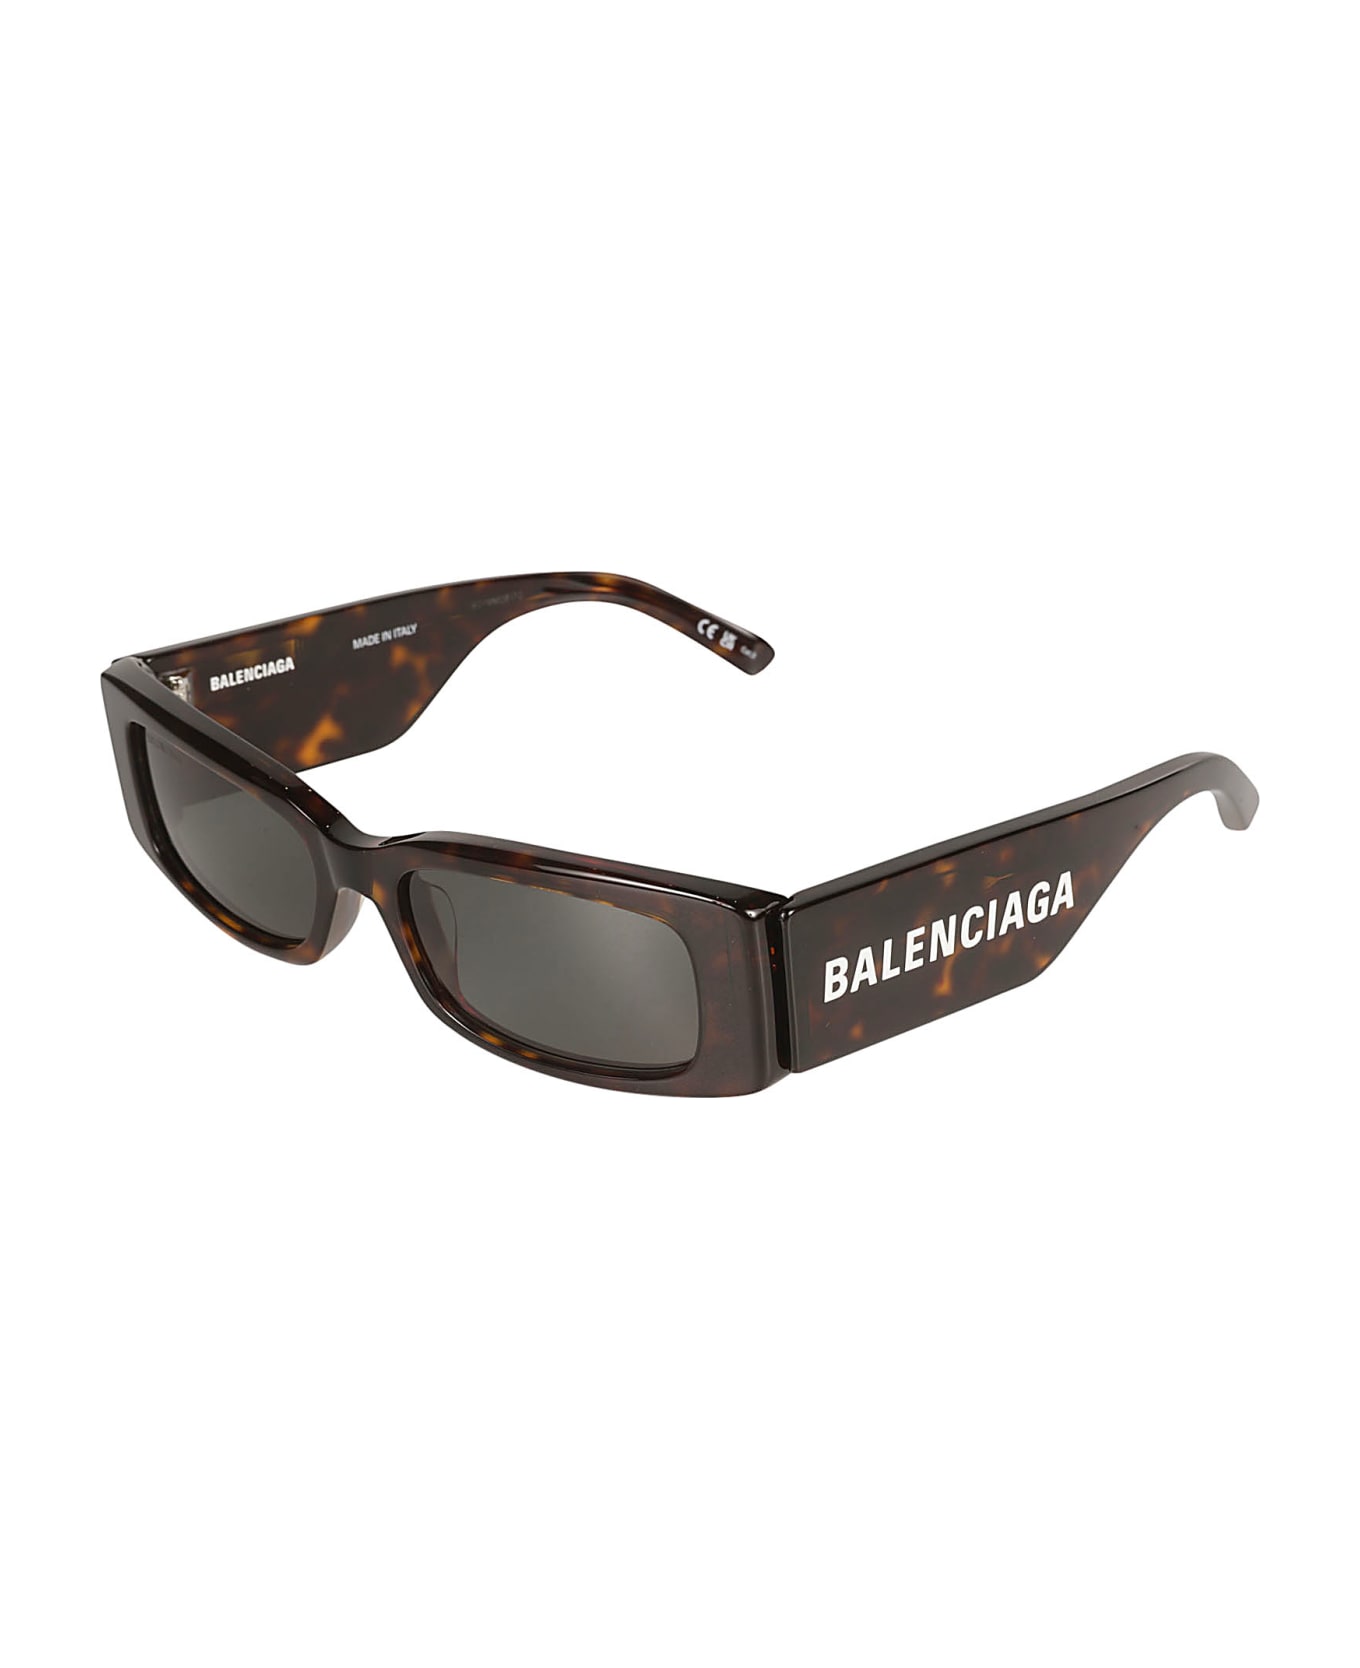 Balenciaga Eyewear Flame Effect Rectangular Sunglasses - Havana/Green